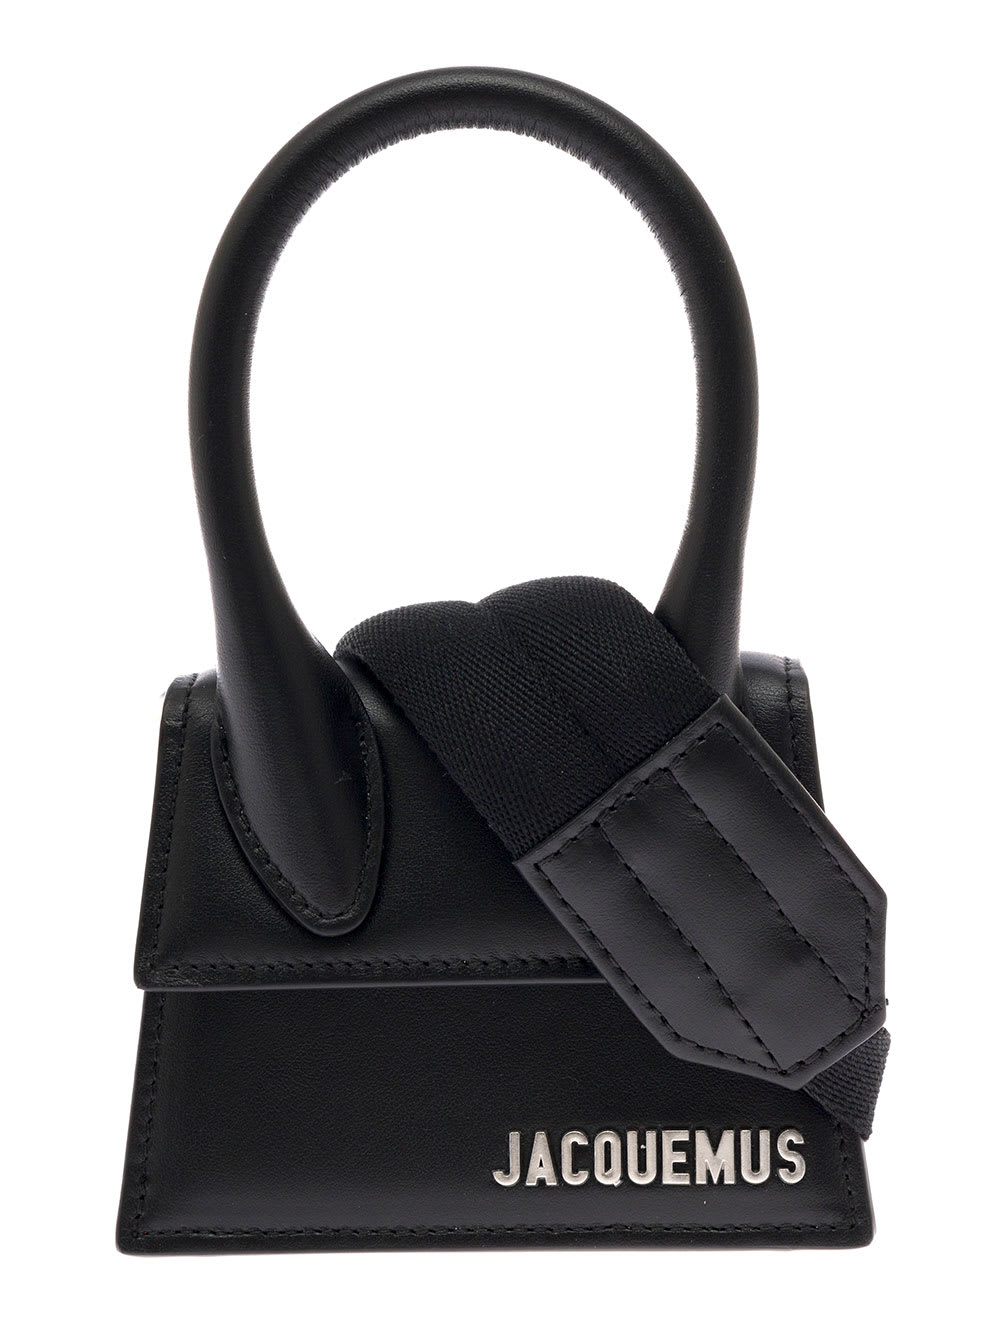 Jacquemus Mans Le Chiquito Homme Black Leather Crossbody Bag